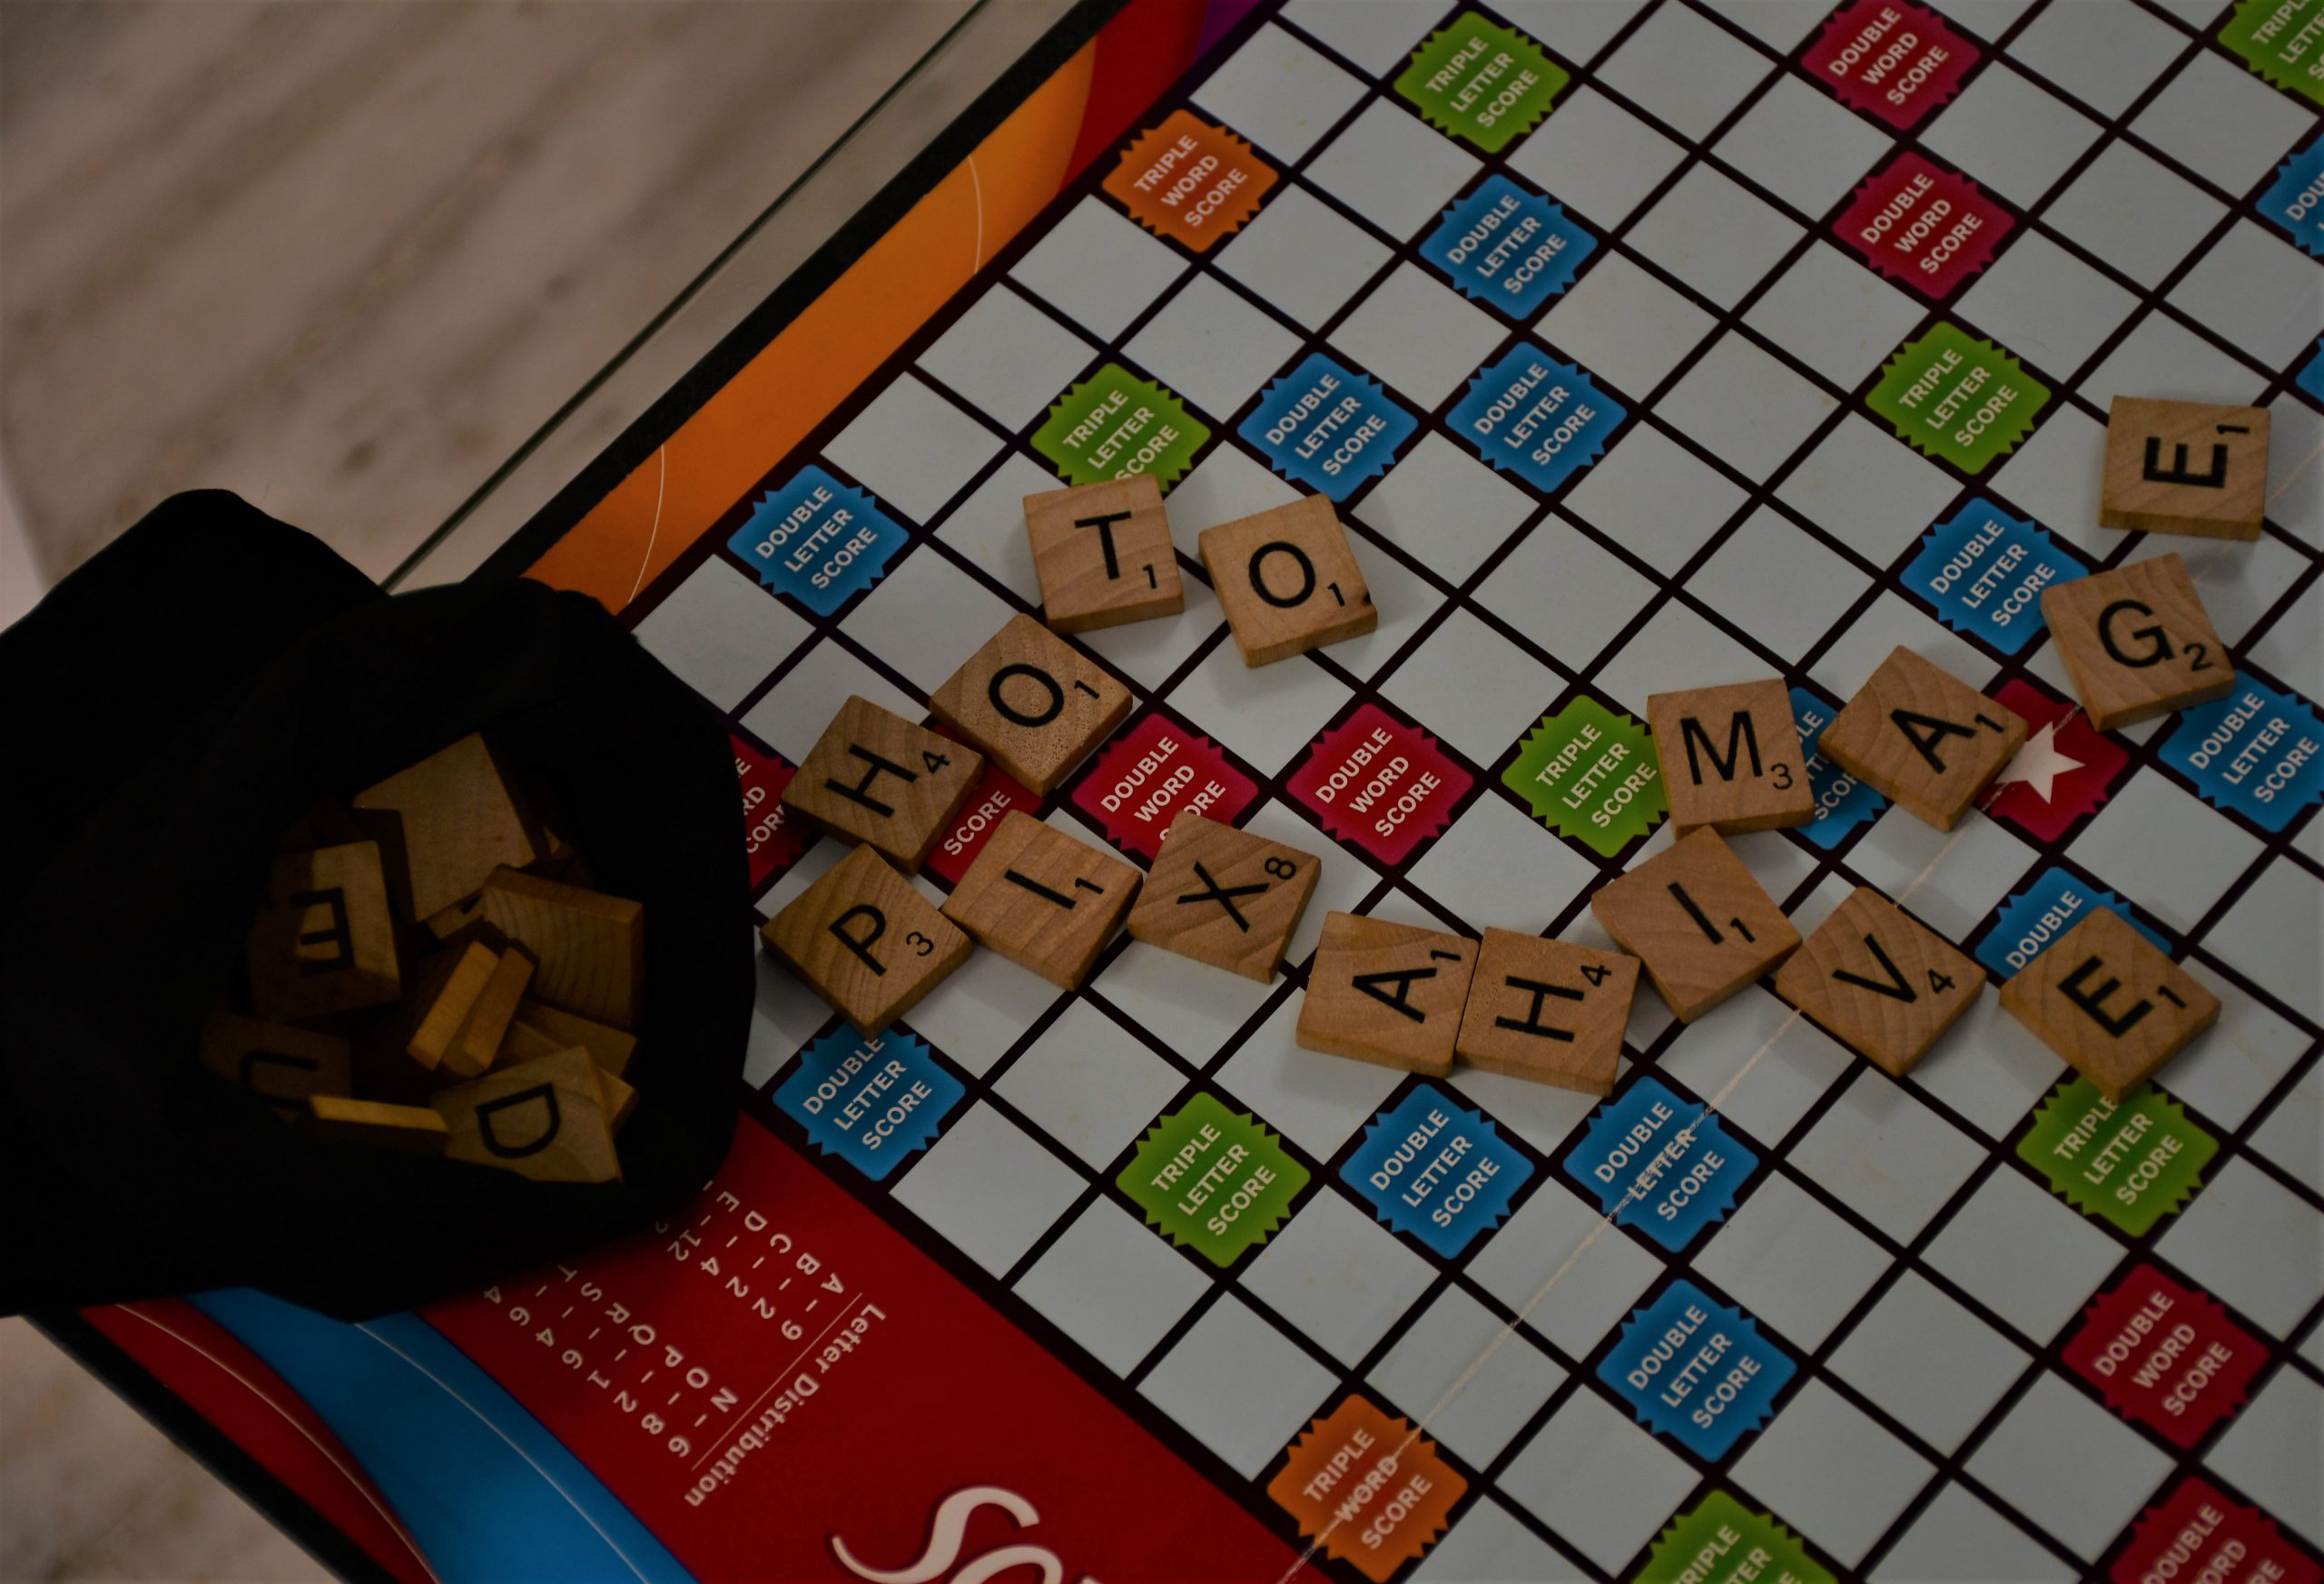 Scrabble game